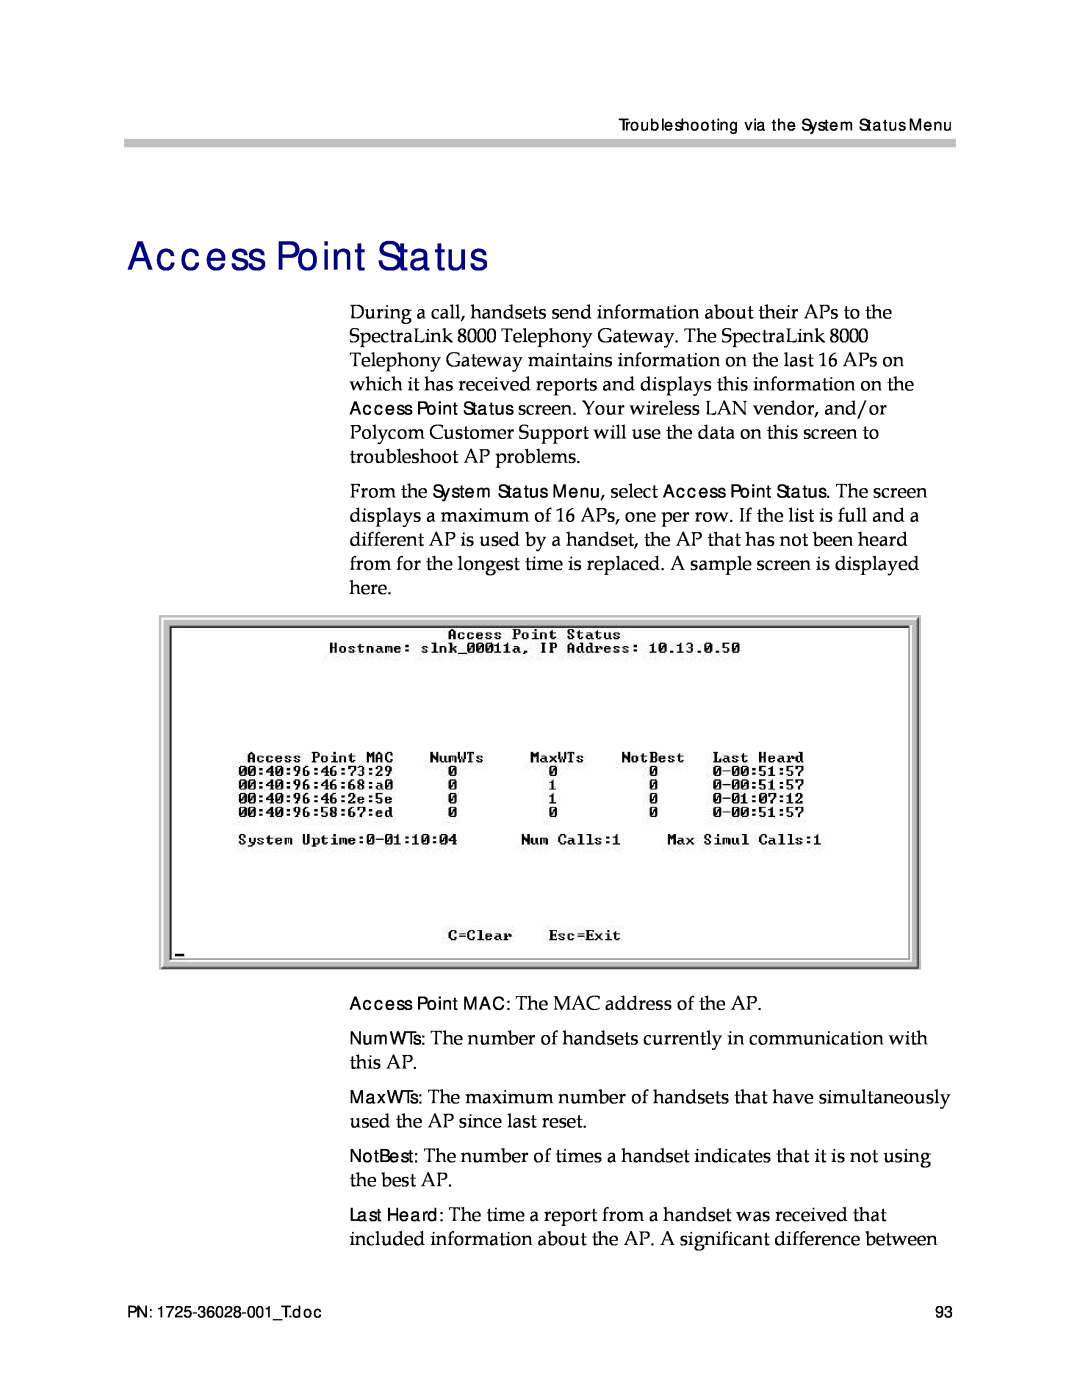 Polycom 1725-36028-001 manual Access Point Status 